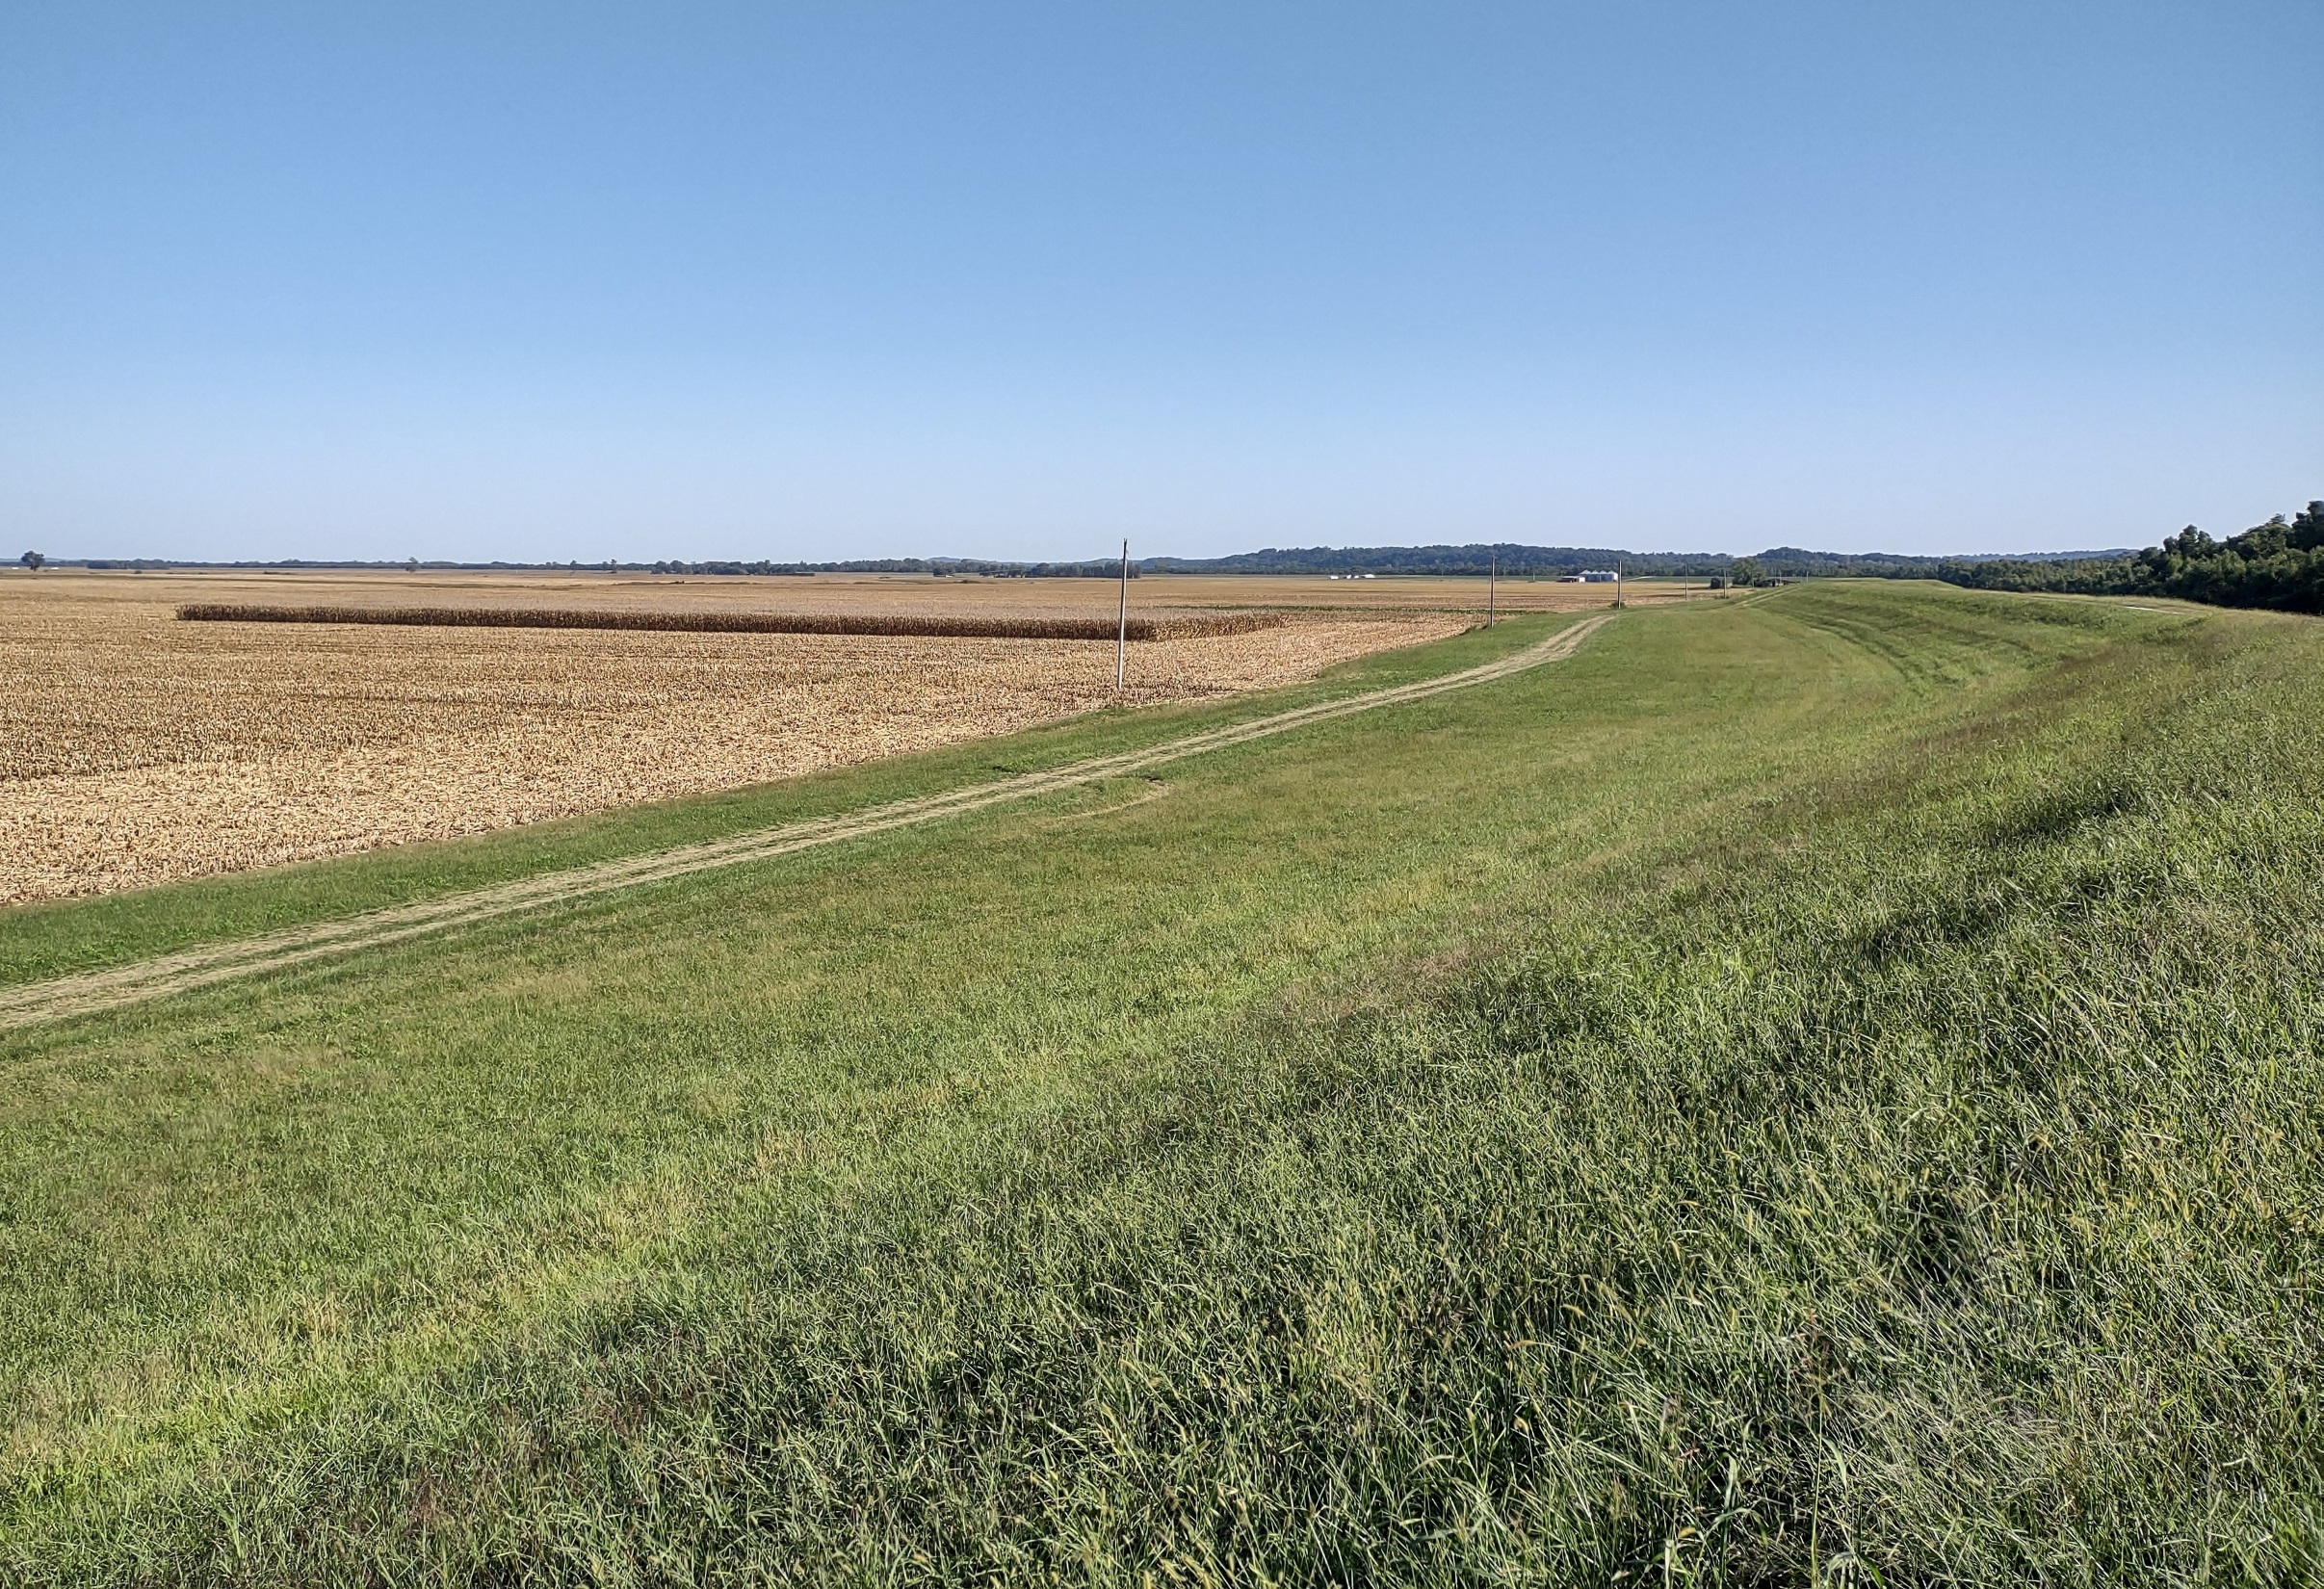 Photograph of levee and partially harvested cornfield, Kaskaskia Island, Illinois.